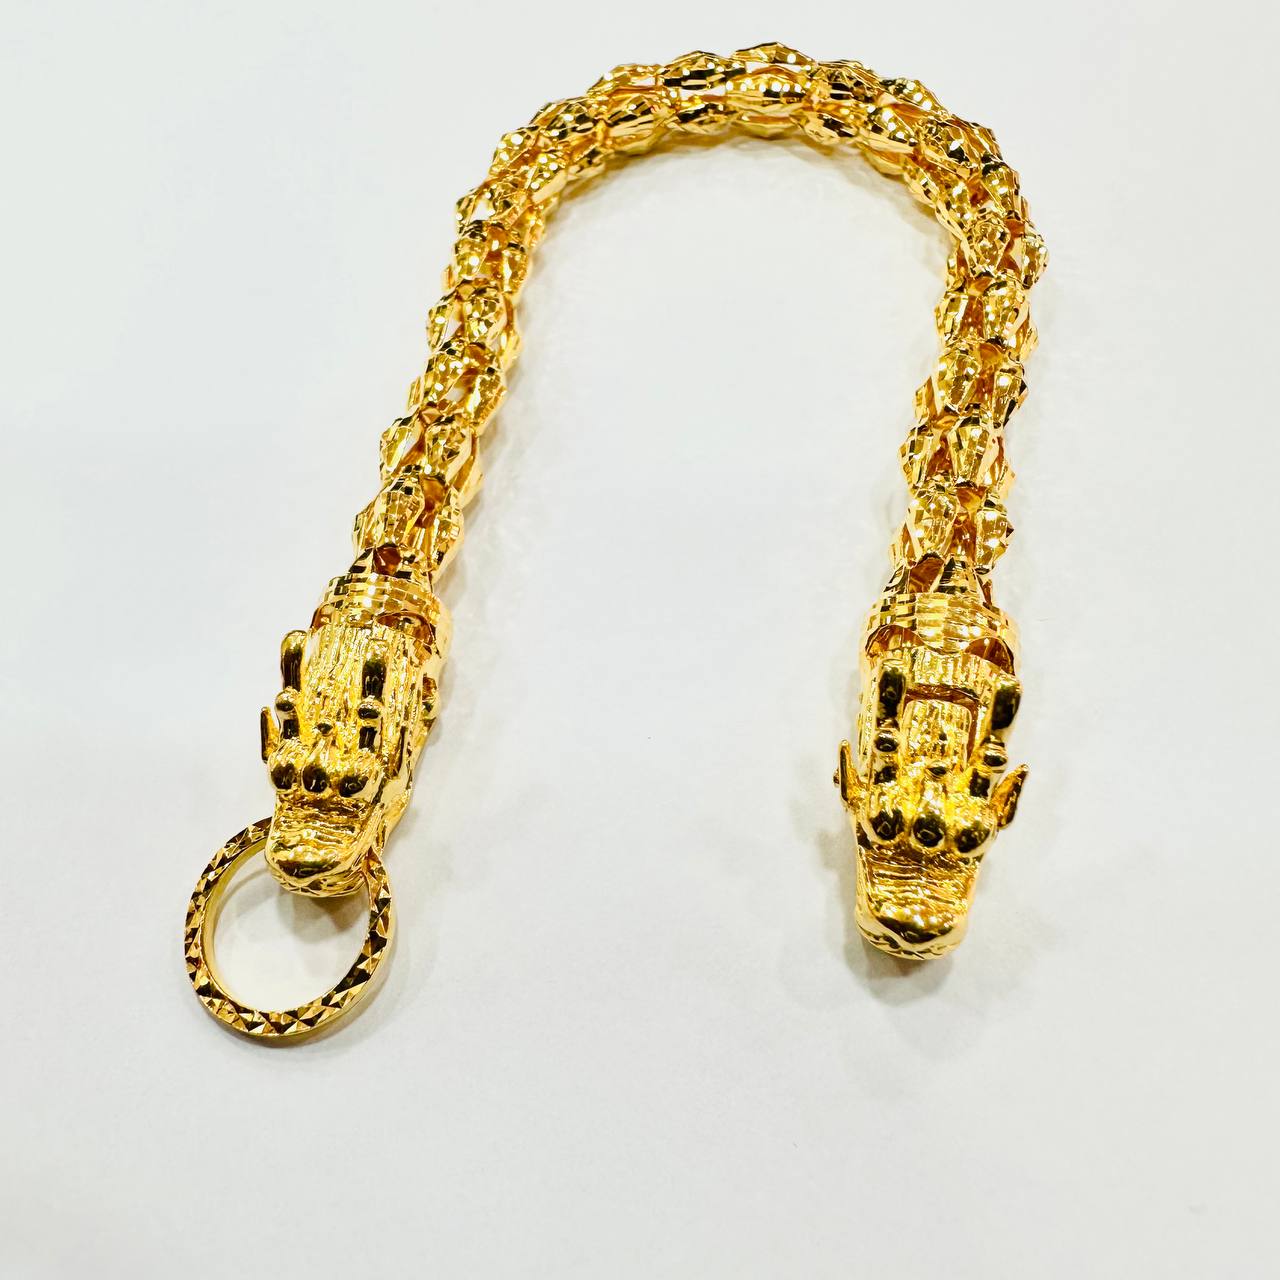 22k / 916 Gold Double Dragon bracelet-916 gold-Best Gold Shop